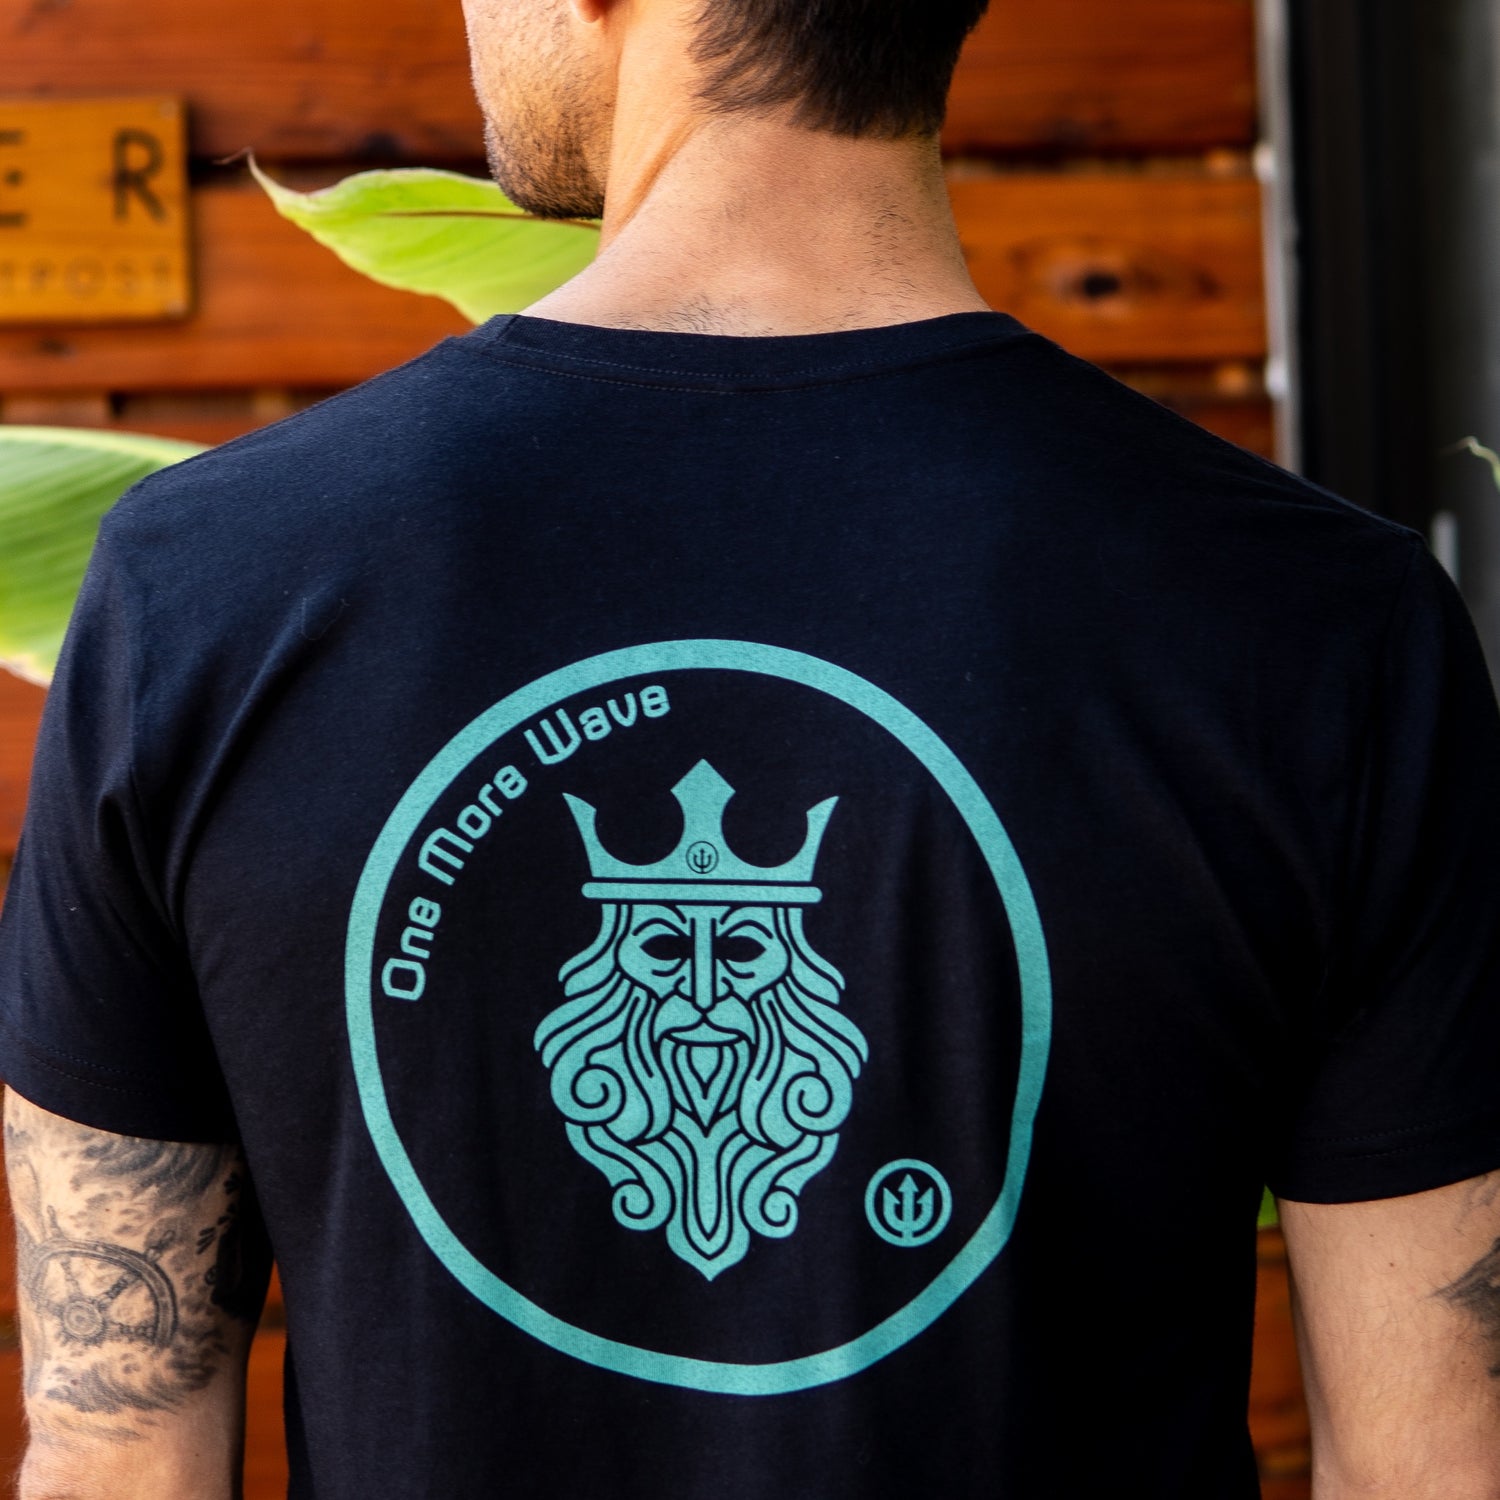 Poseidon T-Shirt